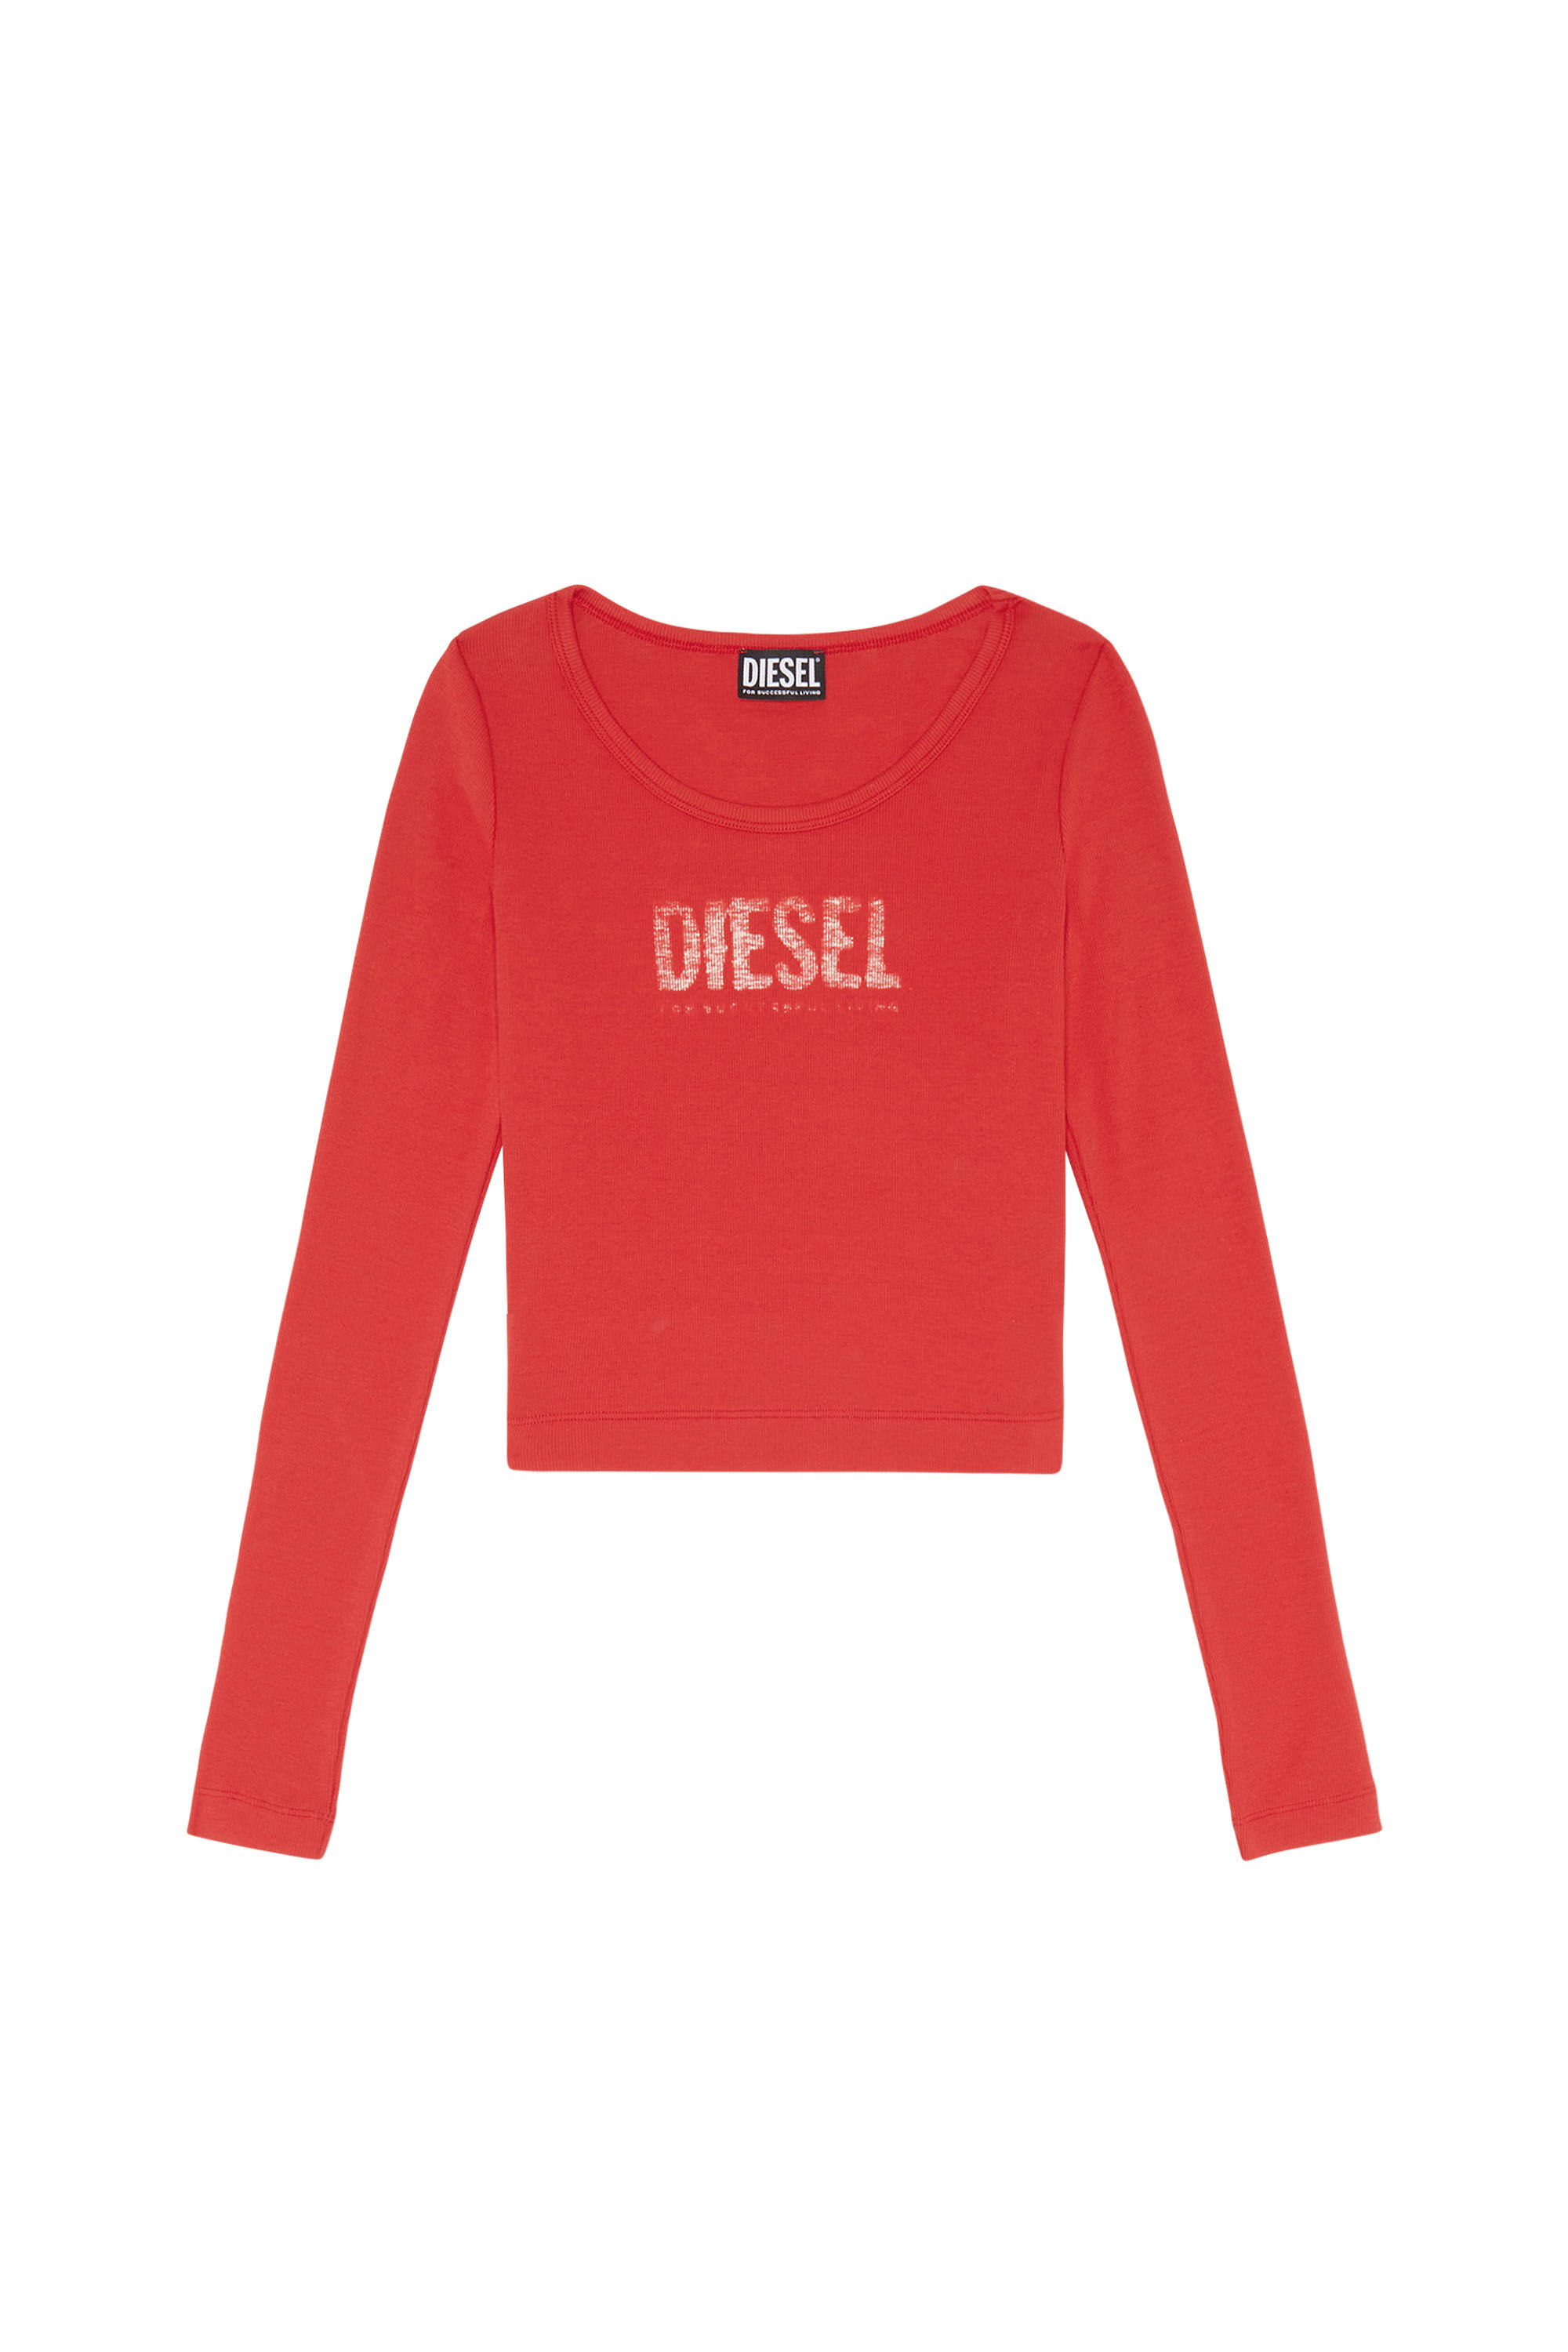 Diesel - T-BALLET-E1, Rosso - Image 2